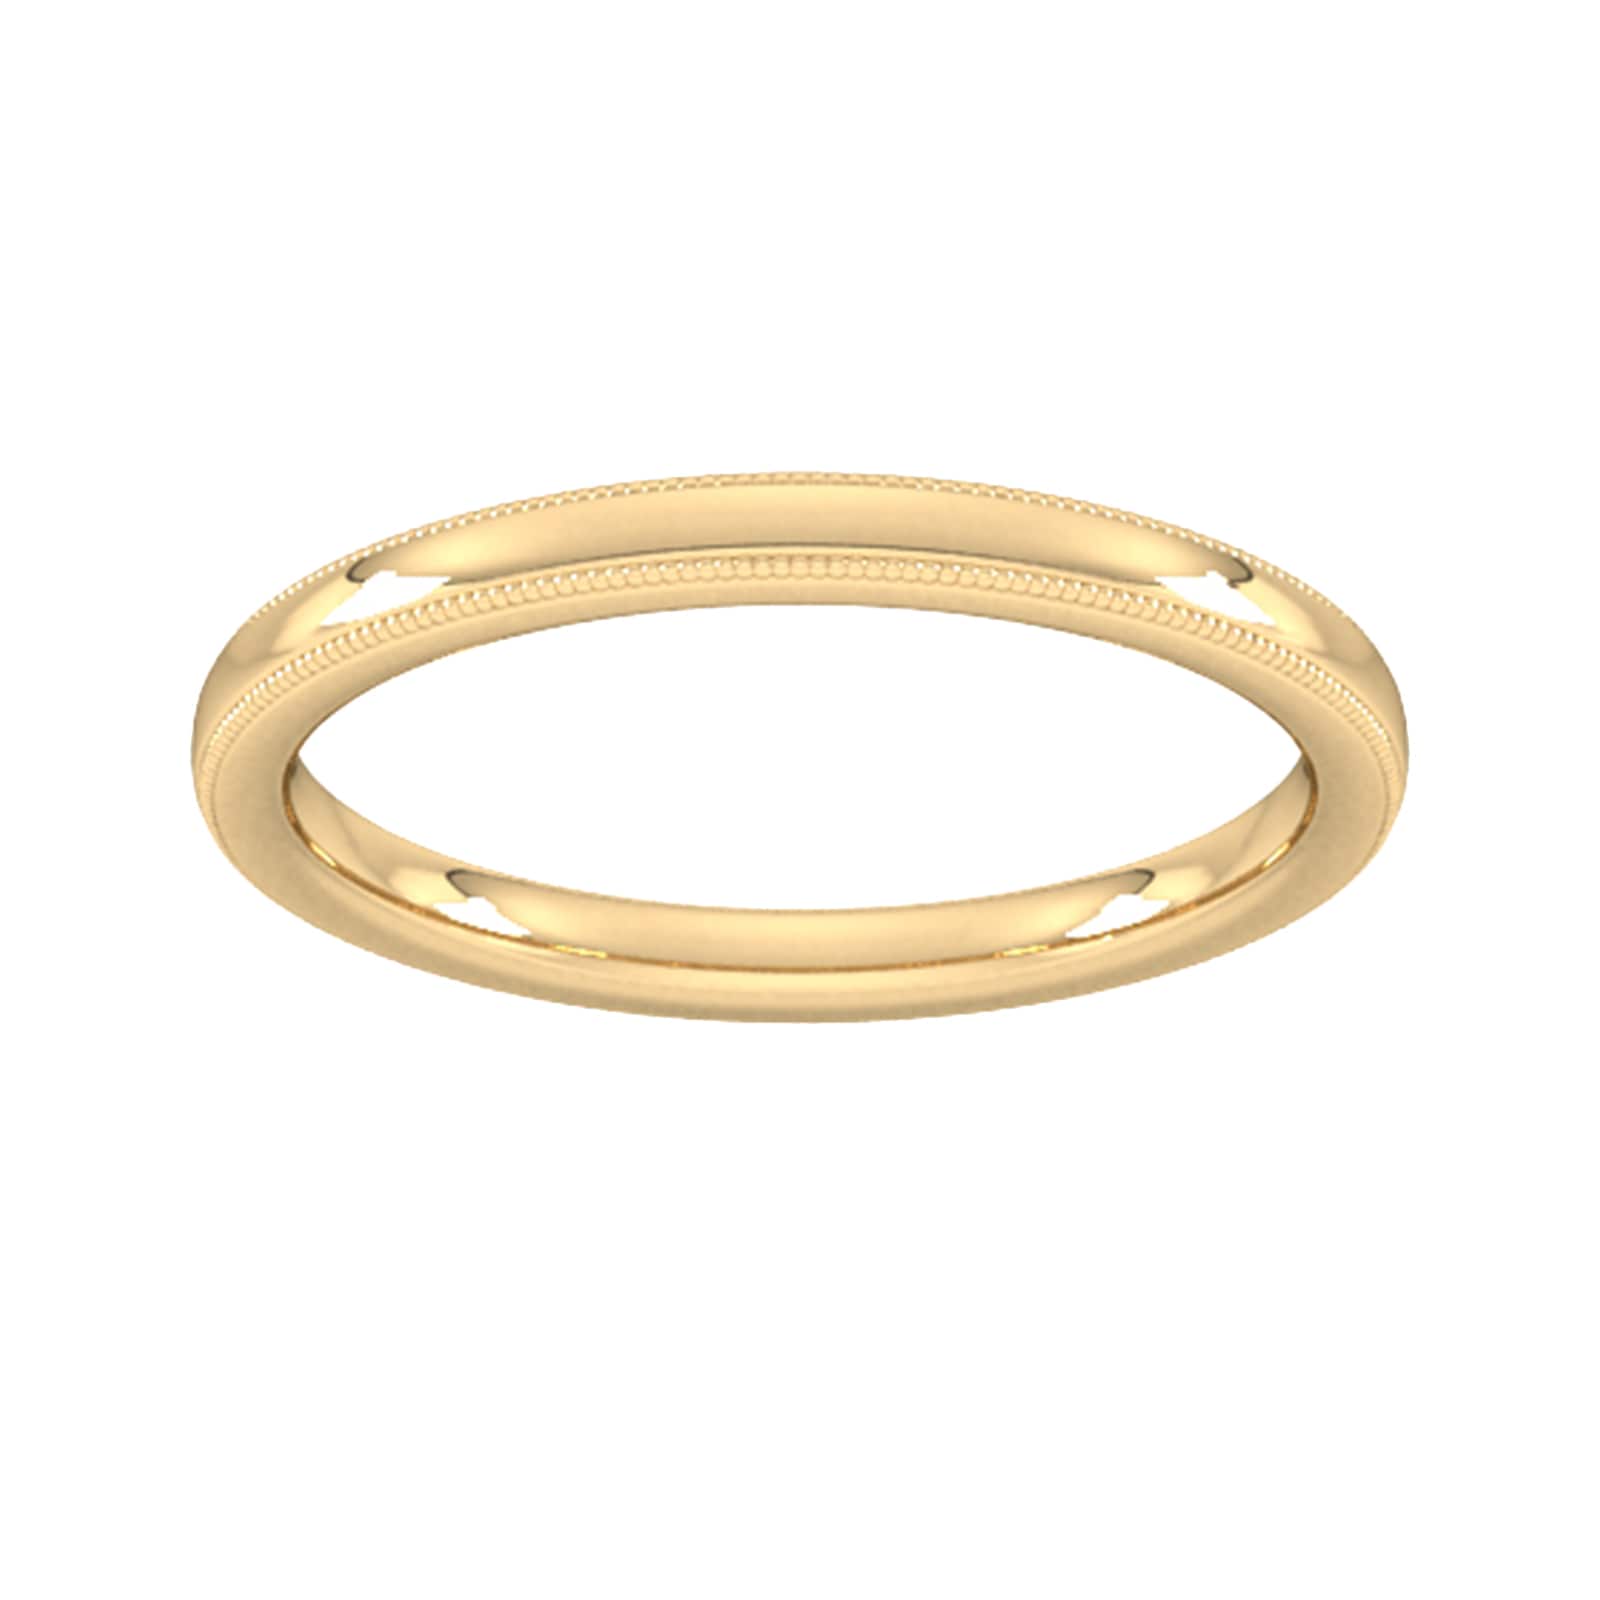 2mm Traditional Court Standard Milgrain Edge Wedding Ring In 9 Carat Yellow Gold - Ring Size Q